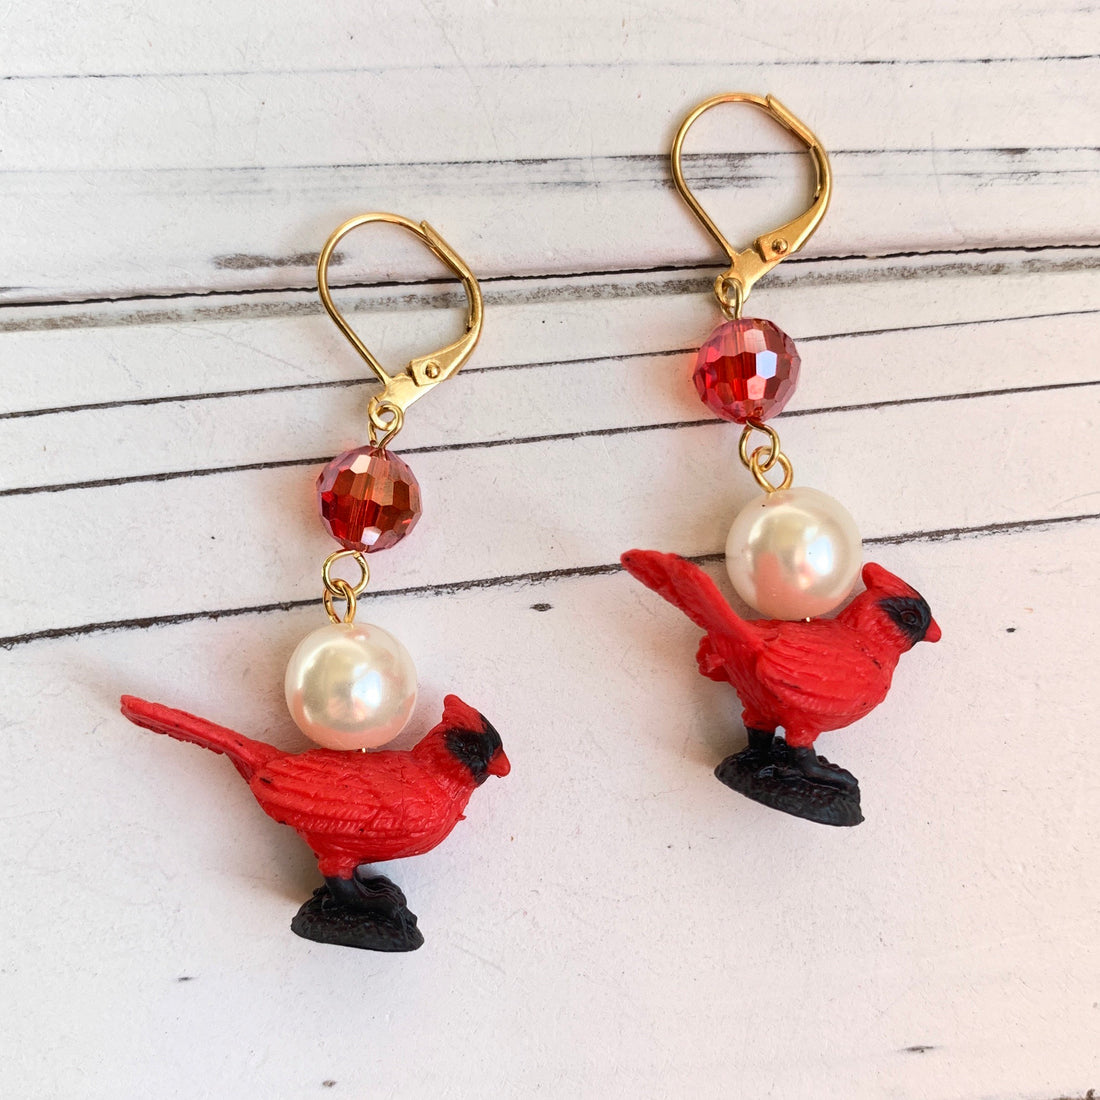 Lenora Dame Miniature Candace the Cardinal Holiday Earrings